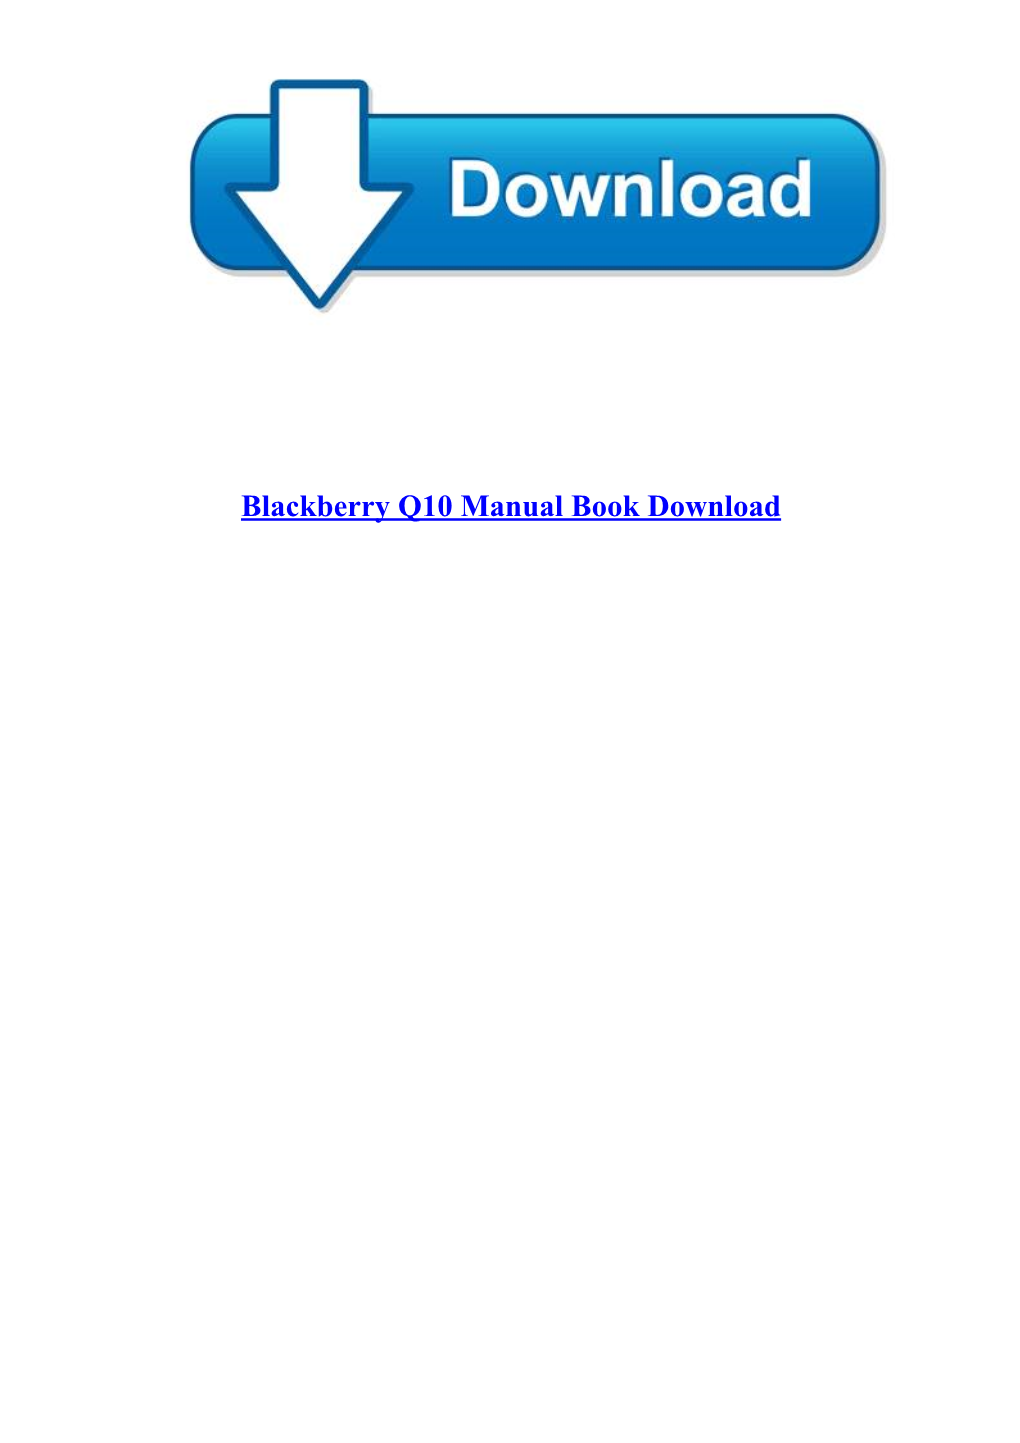 Blackberry Q10 Manual Book Download Blackberry Q10 Manual Book